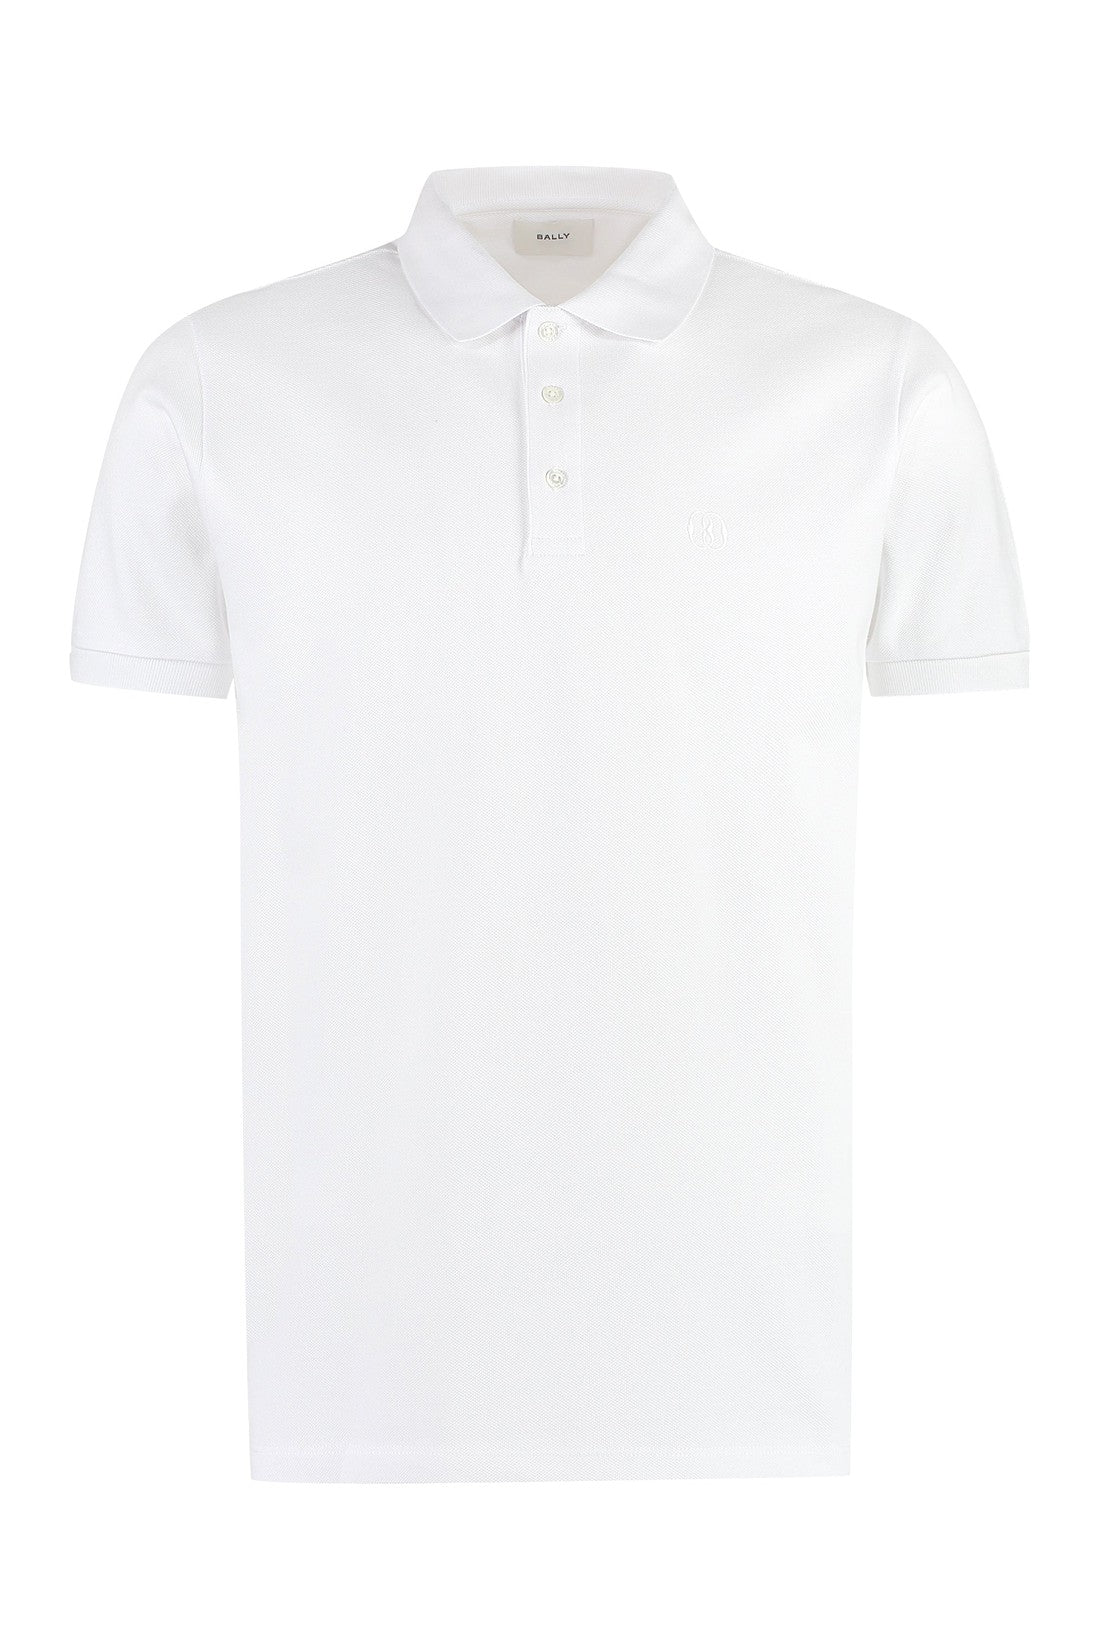 Bally-OUTLET-SALE-Cotton piqué polo shirt-ARCHIVIST